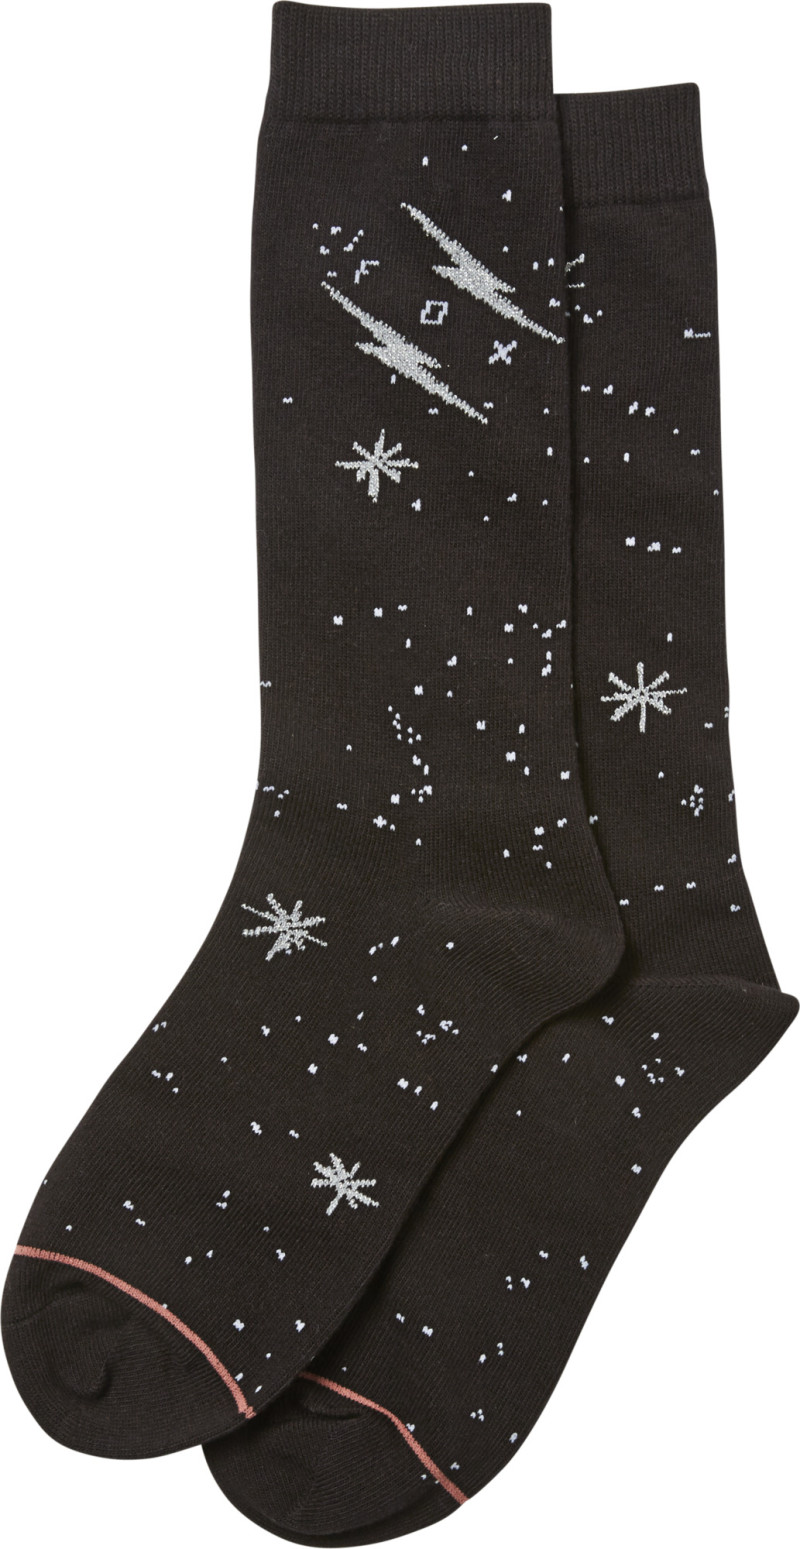 fox racing socks  galaxy socks - casual